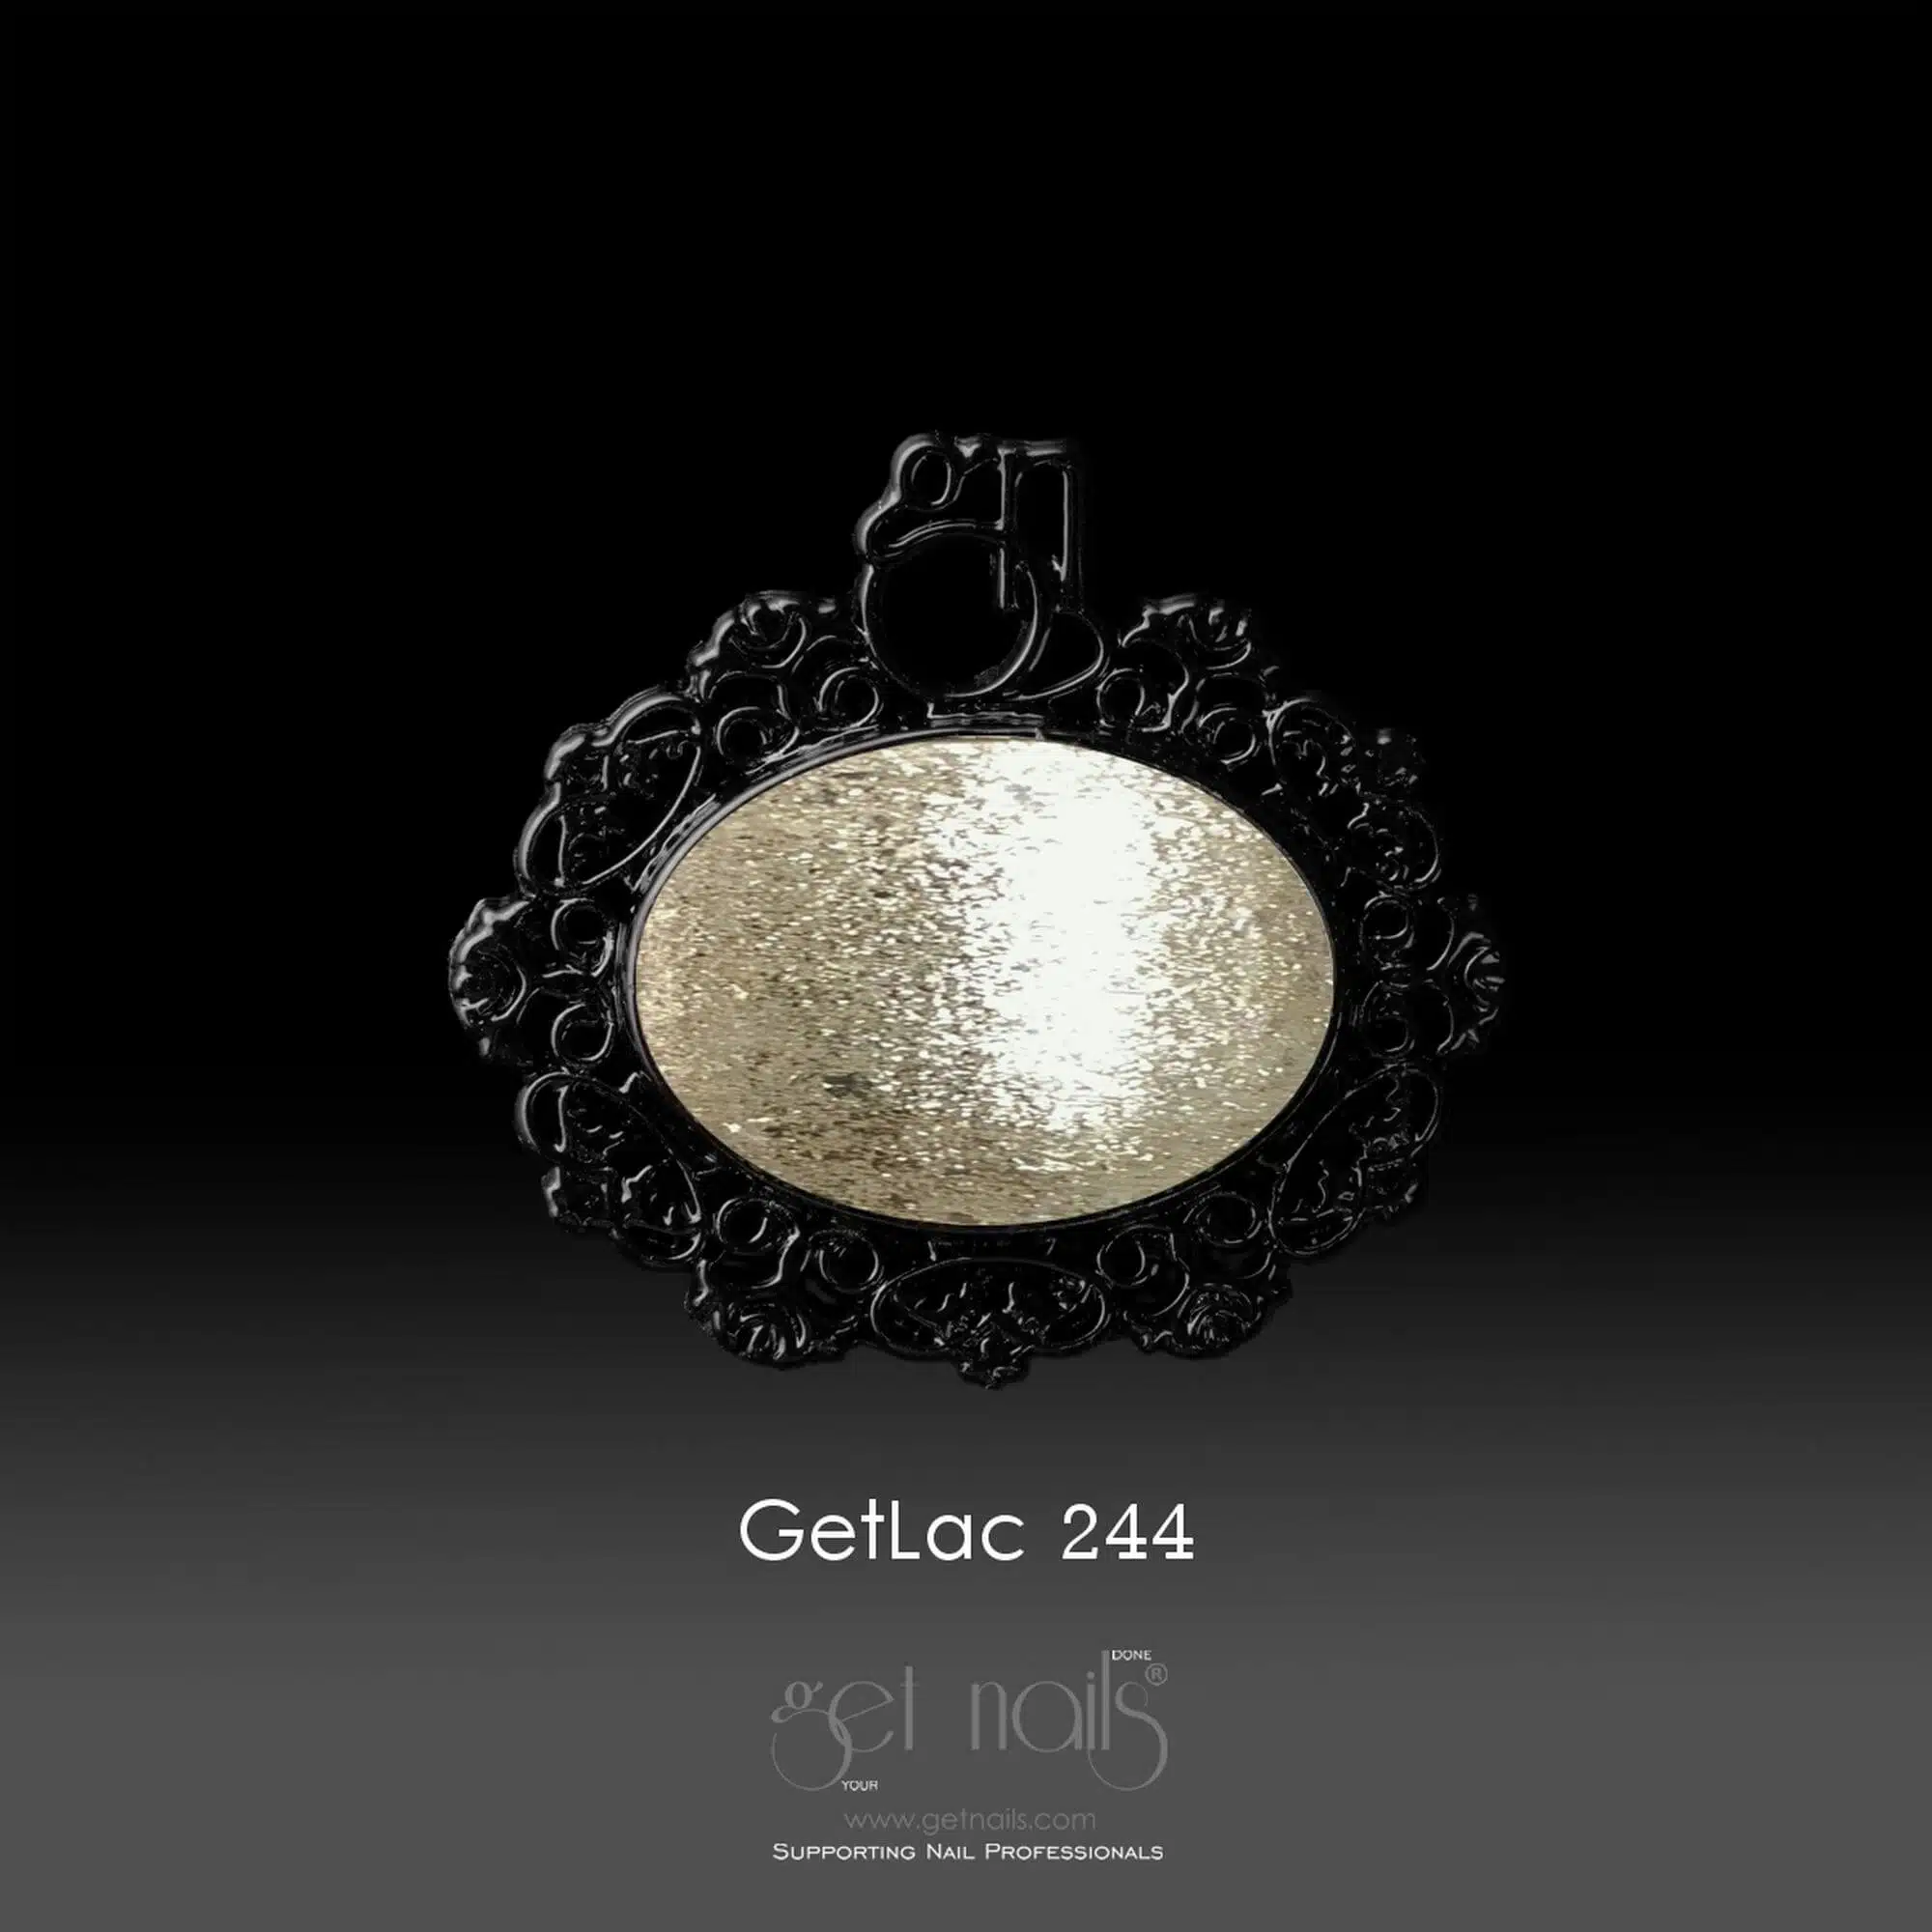 Get Nails Austria - GetLac 244 Brilliant Soft Gold 15г